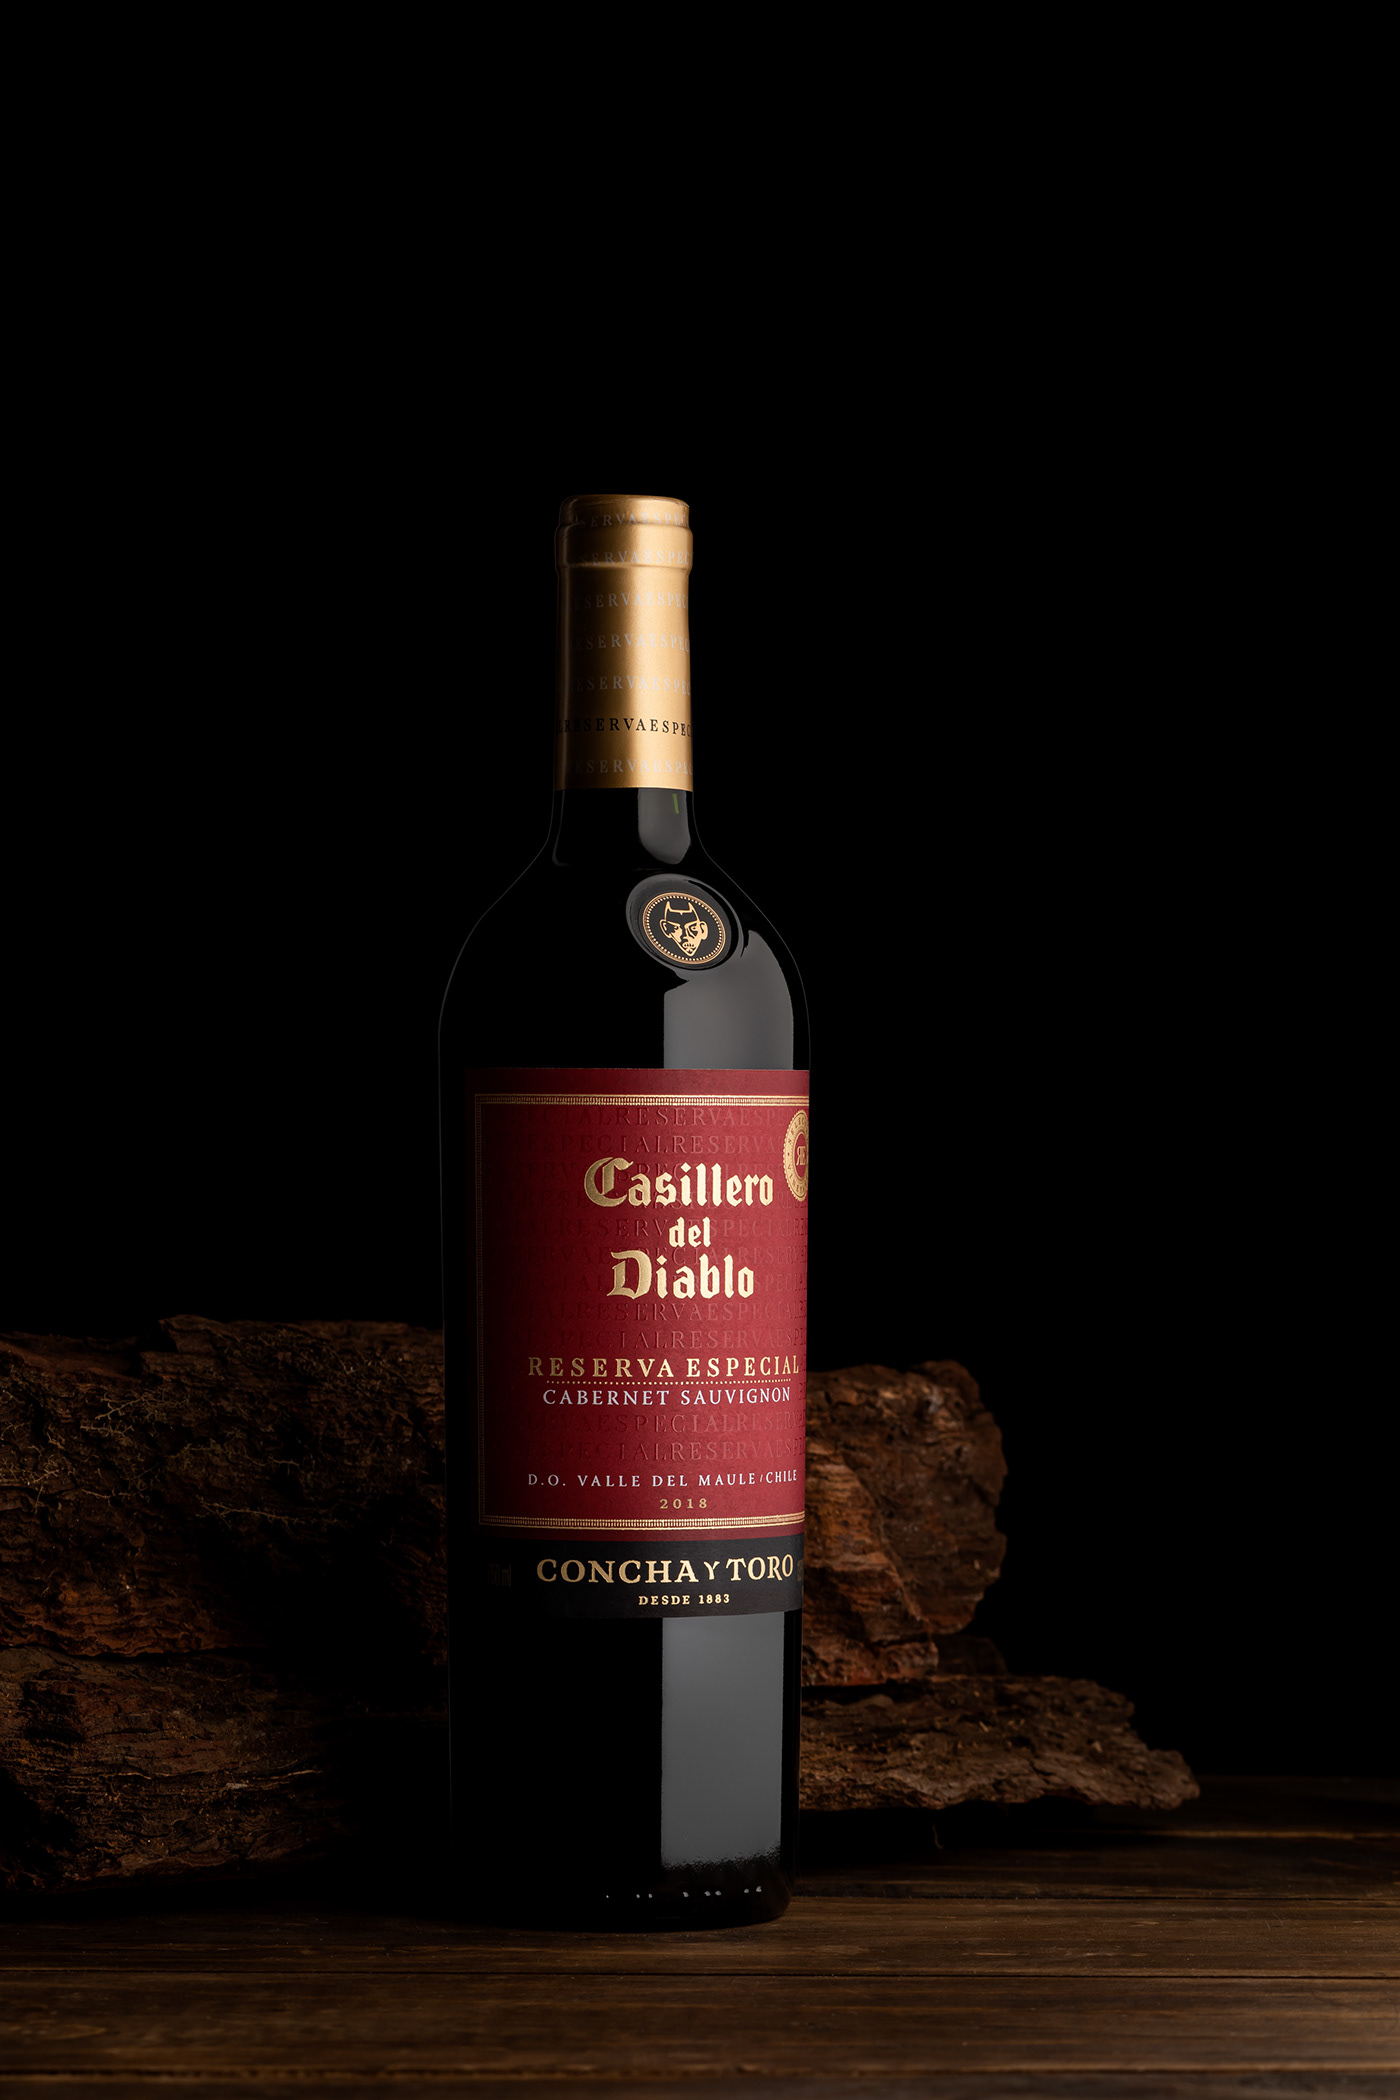 artefoto chile Casillero del diablo chile concha y toro photoshop Post Editing retoque digital retoucher Vinos Wines